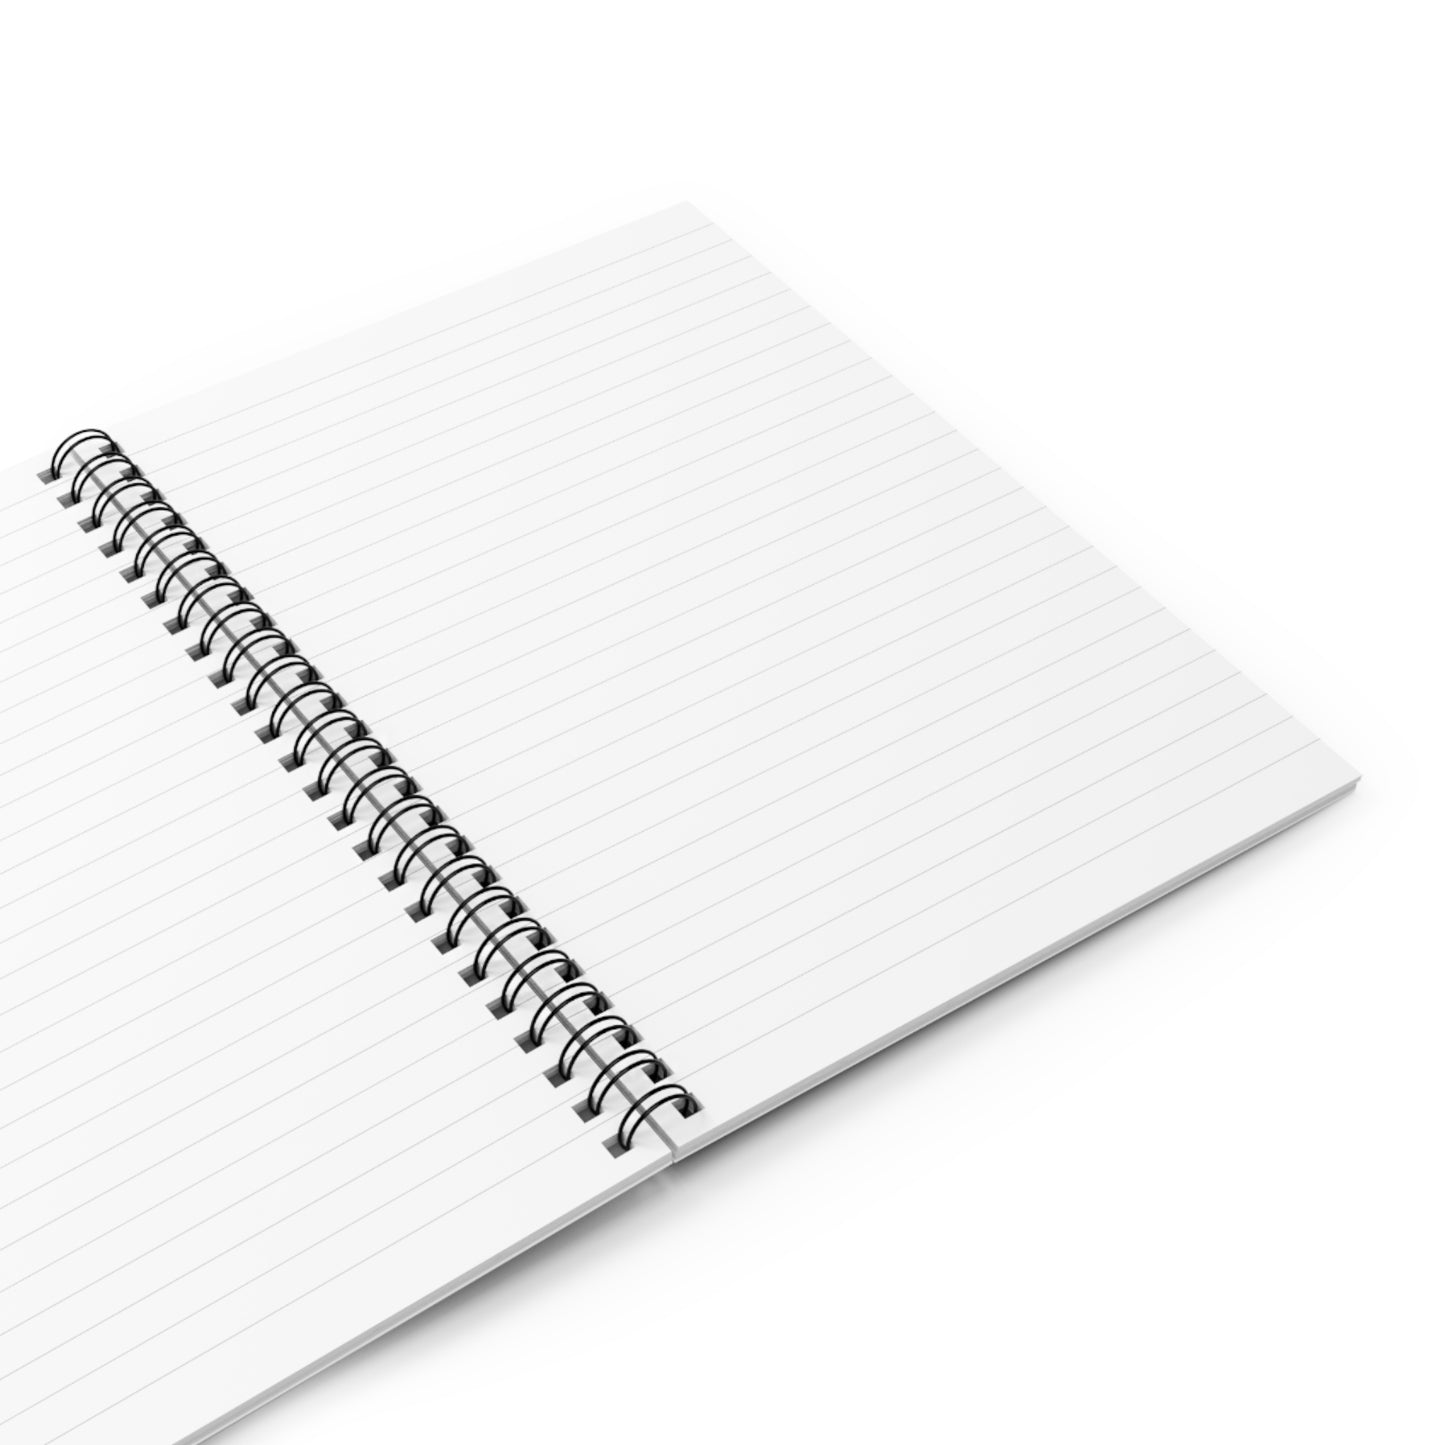 I am a Blessing - Journal Notebook